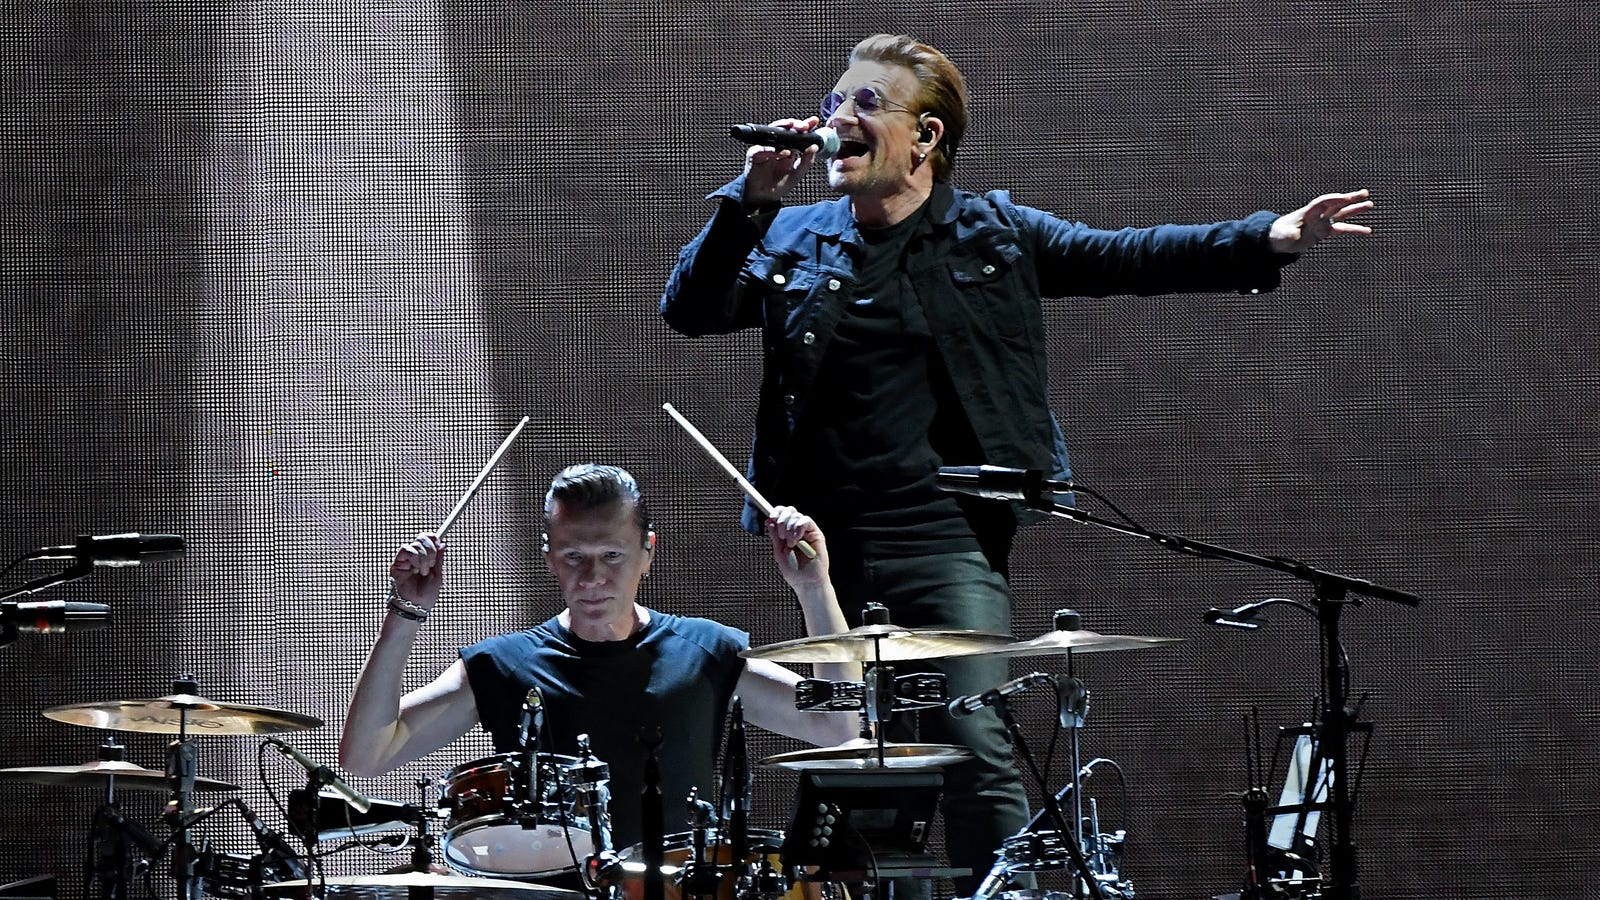 U2 cancels St. Louis concert over security concerns